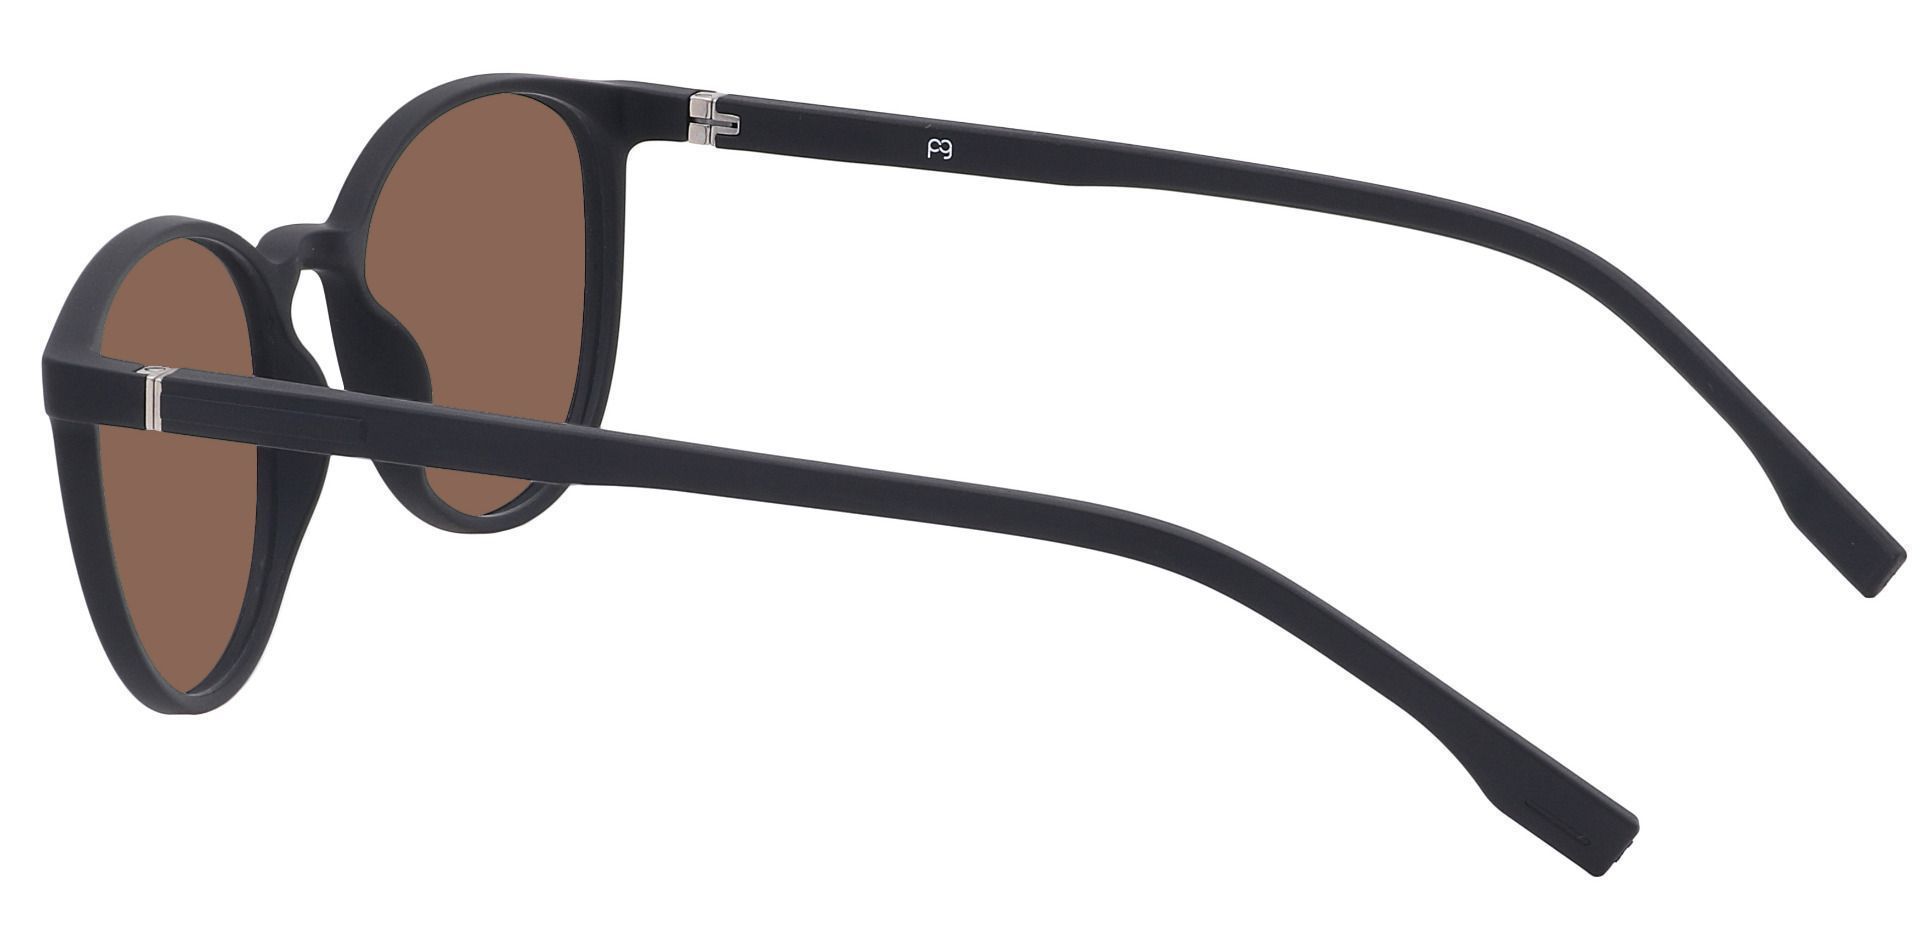 Bay Round Prescription Sunglasses - Black Frame With Brown Lenses